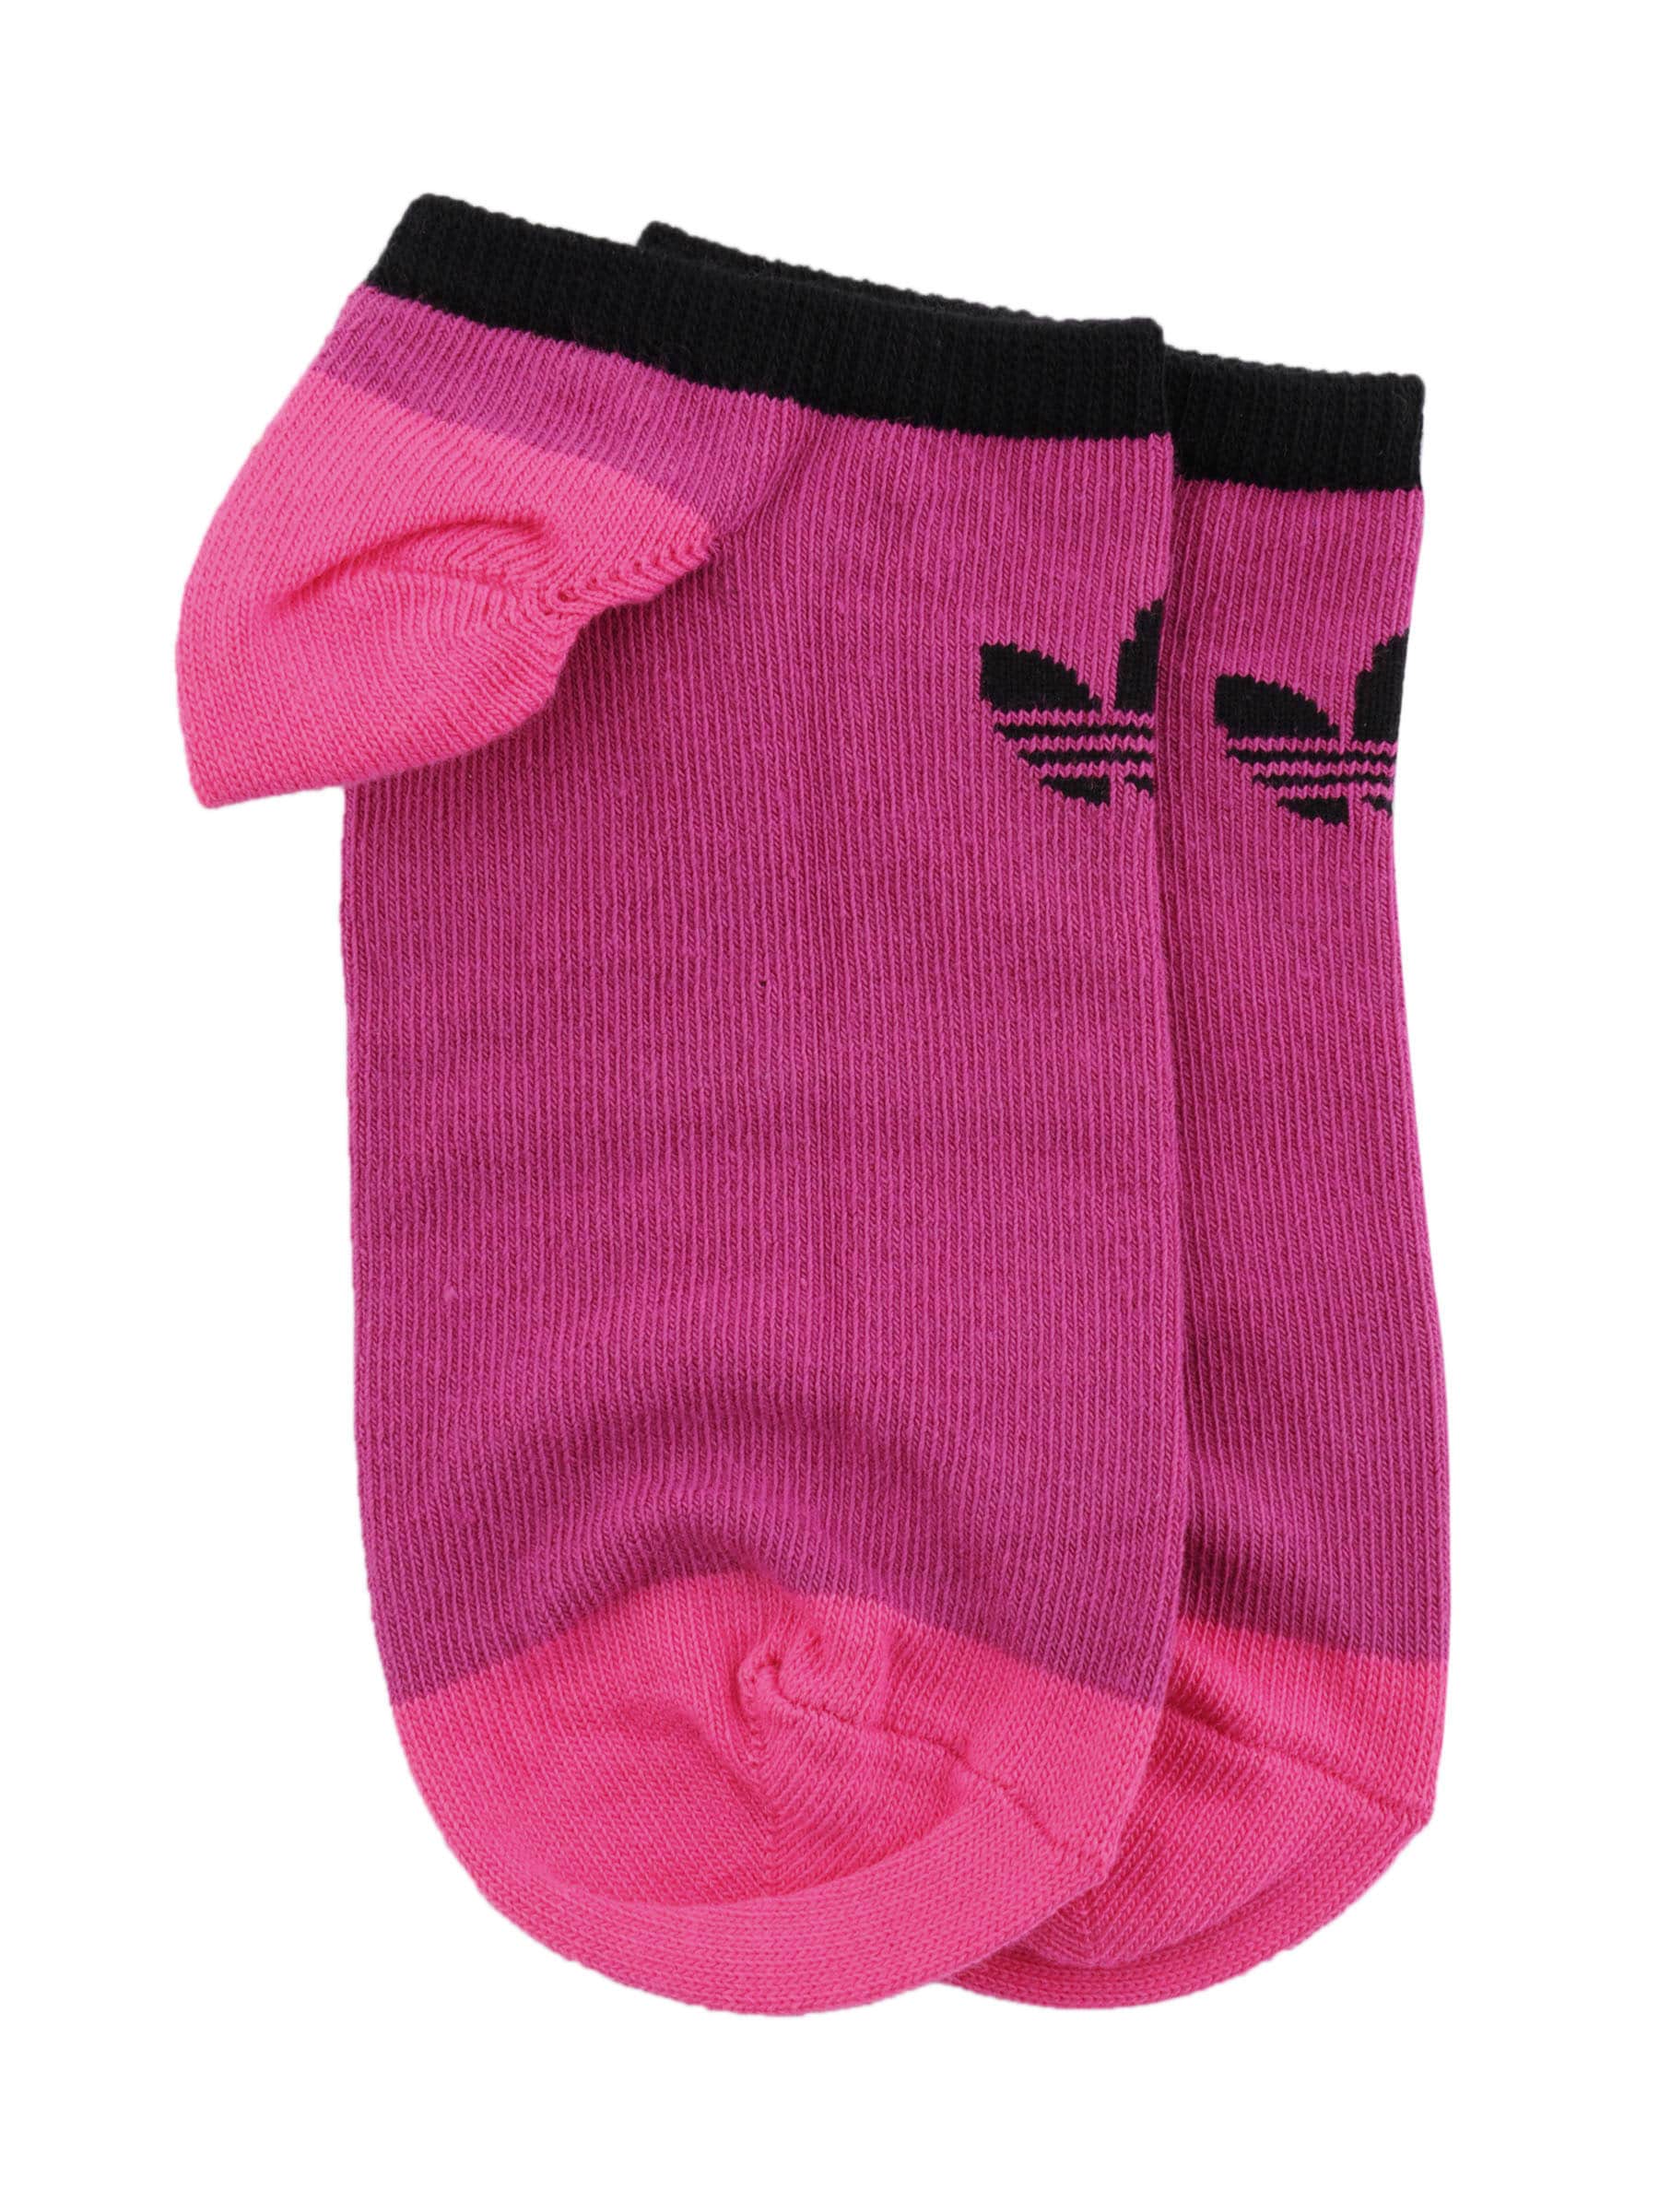 ADIDAS Originals Men Pink Casual Socks